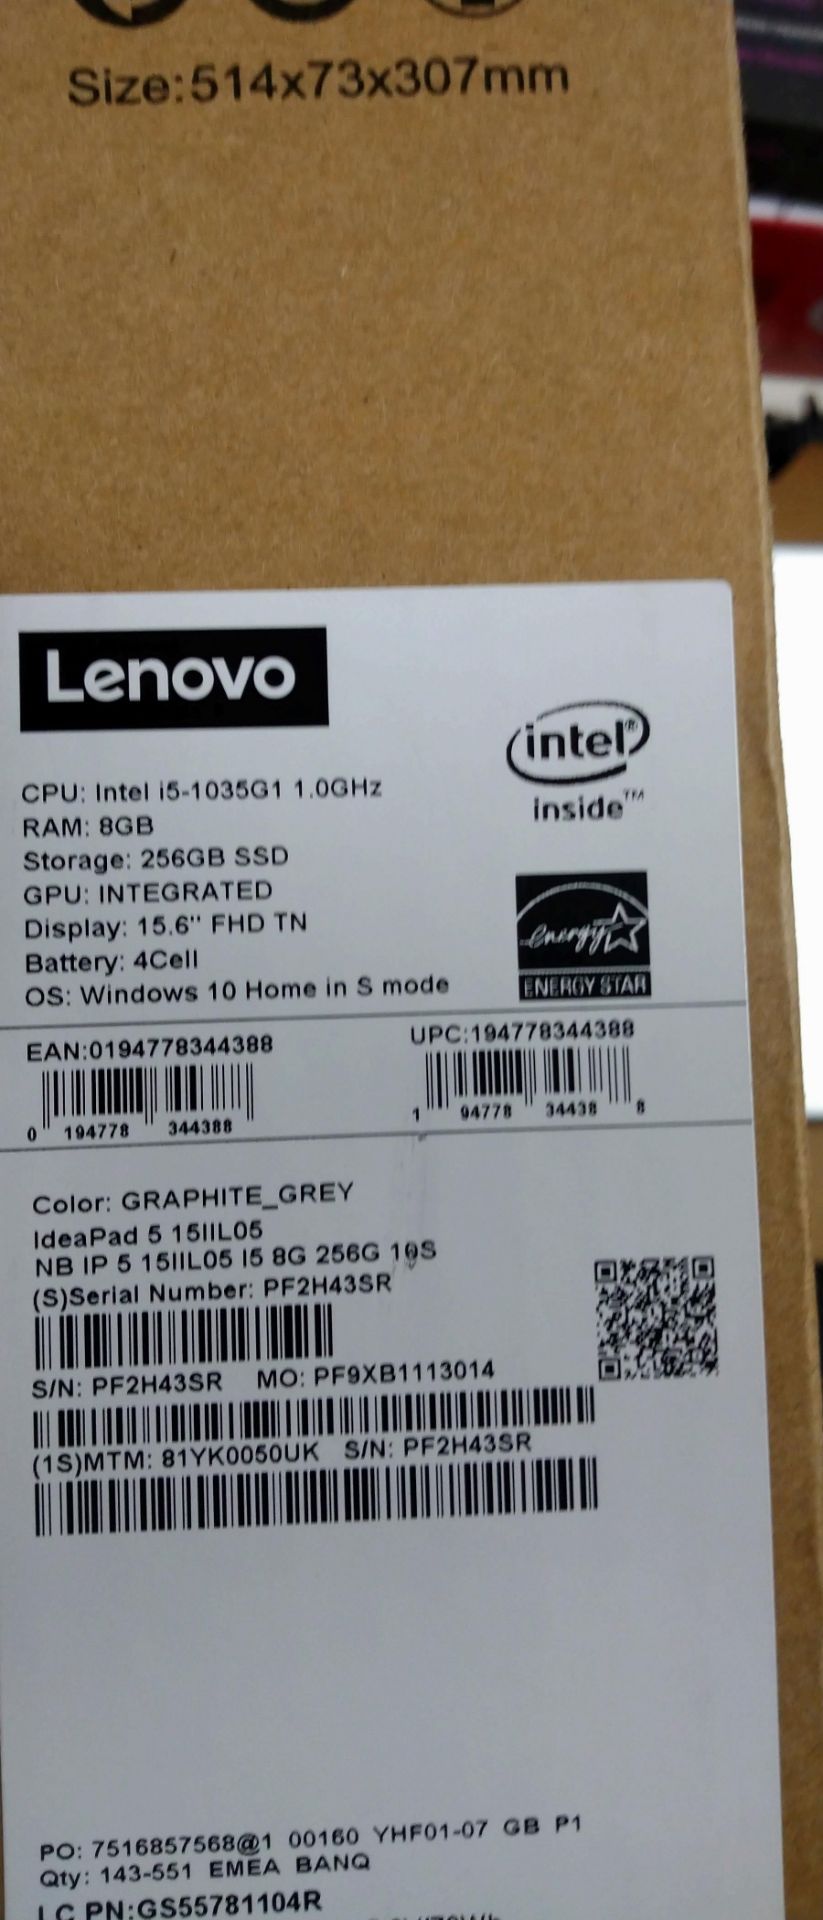 *Lenovo Ideapad 5 15.6" Laptop Computer (Intel i5, - Image 2 of 2